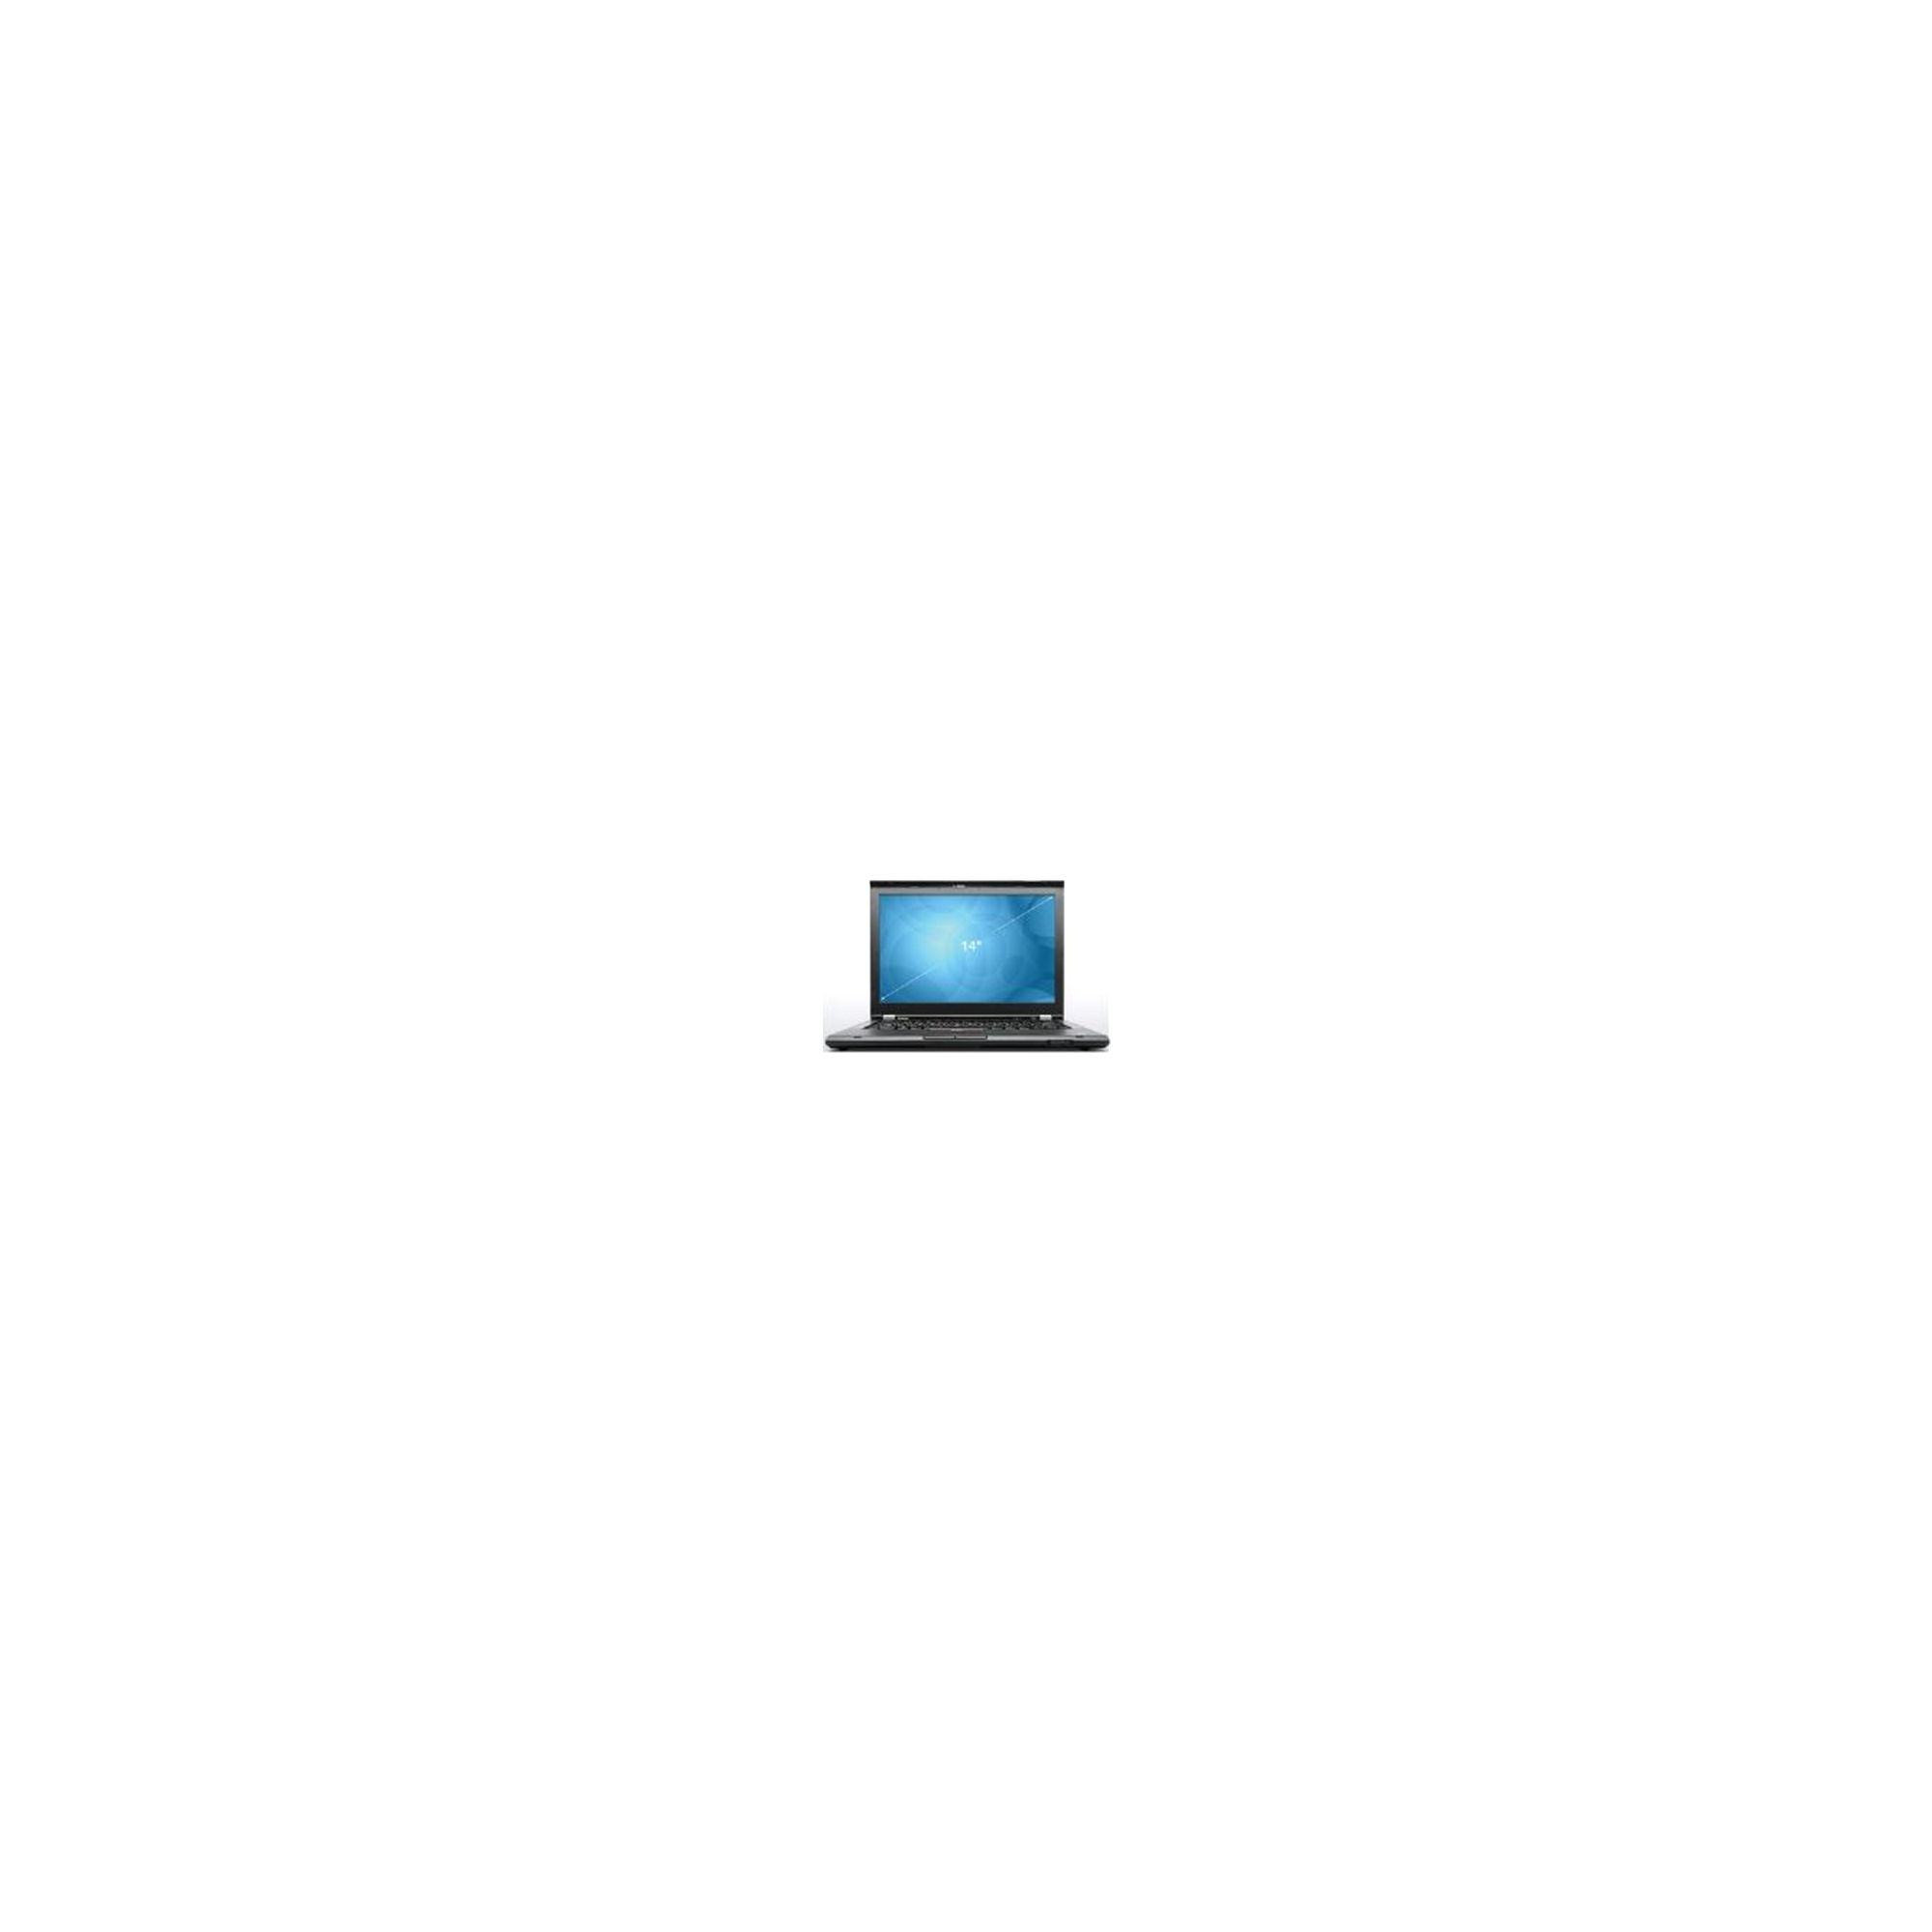 Lenovo ThinkPad T430 2349KAG (14.0 inch) Notebook Core i7 (3520M) 2.9GHz 4GB 500GB DVD±RW WLAN BT Webcam Windows 7 Pro 64-bit/Windows 8 Pro 64-bit at Tesco Direct